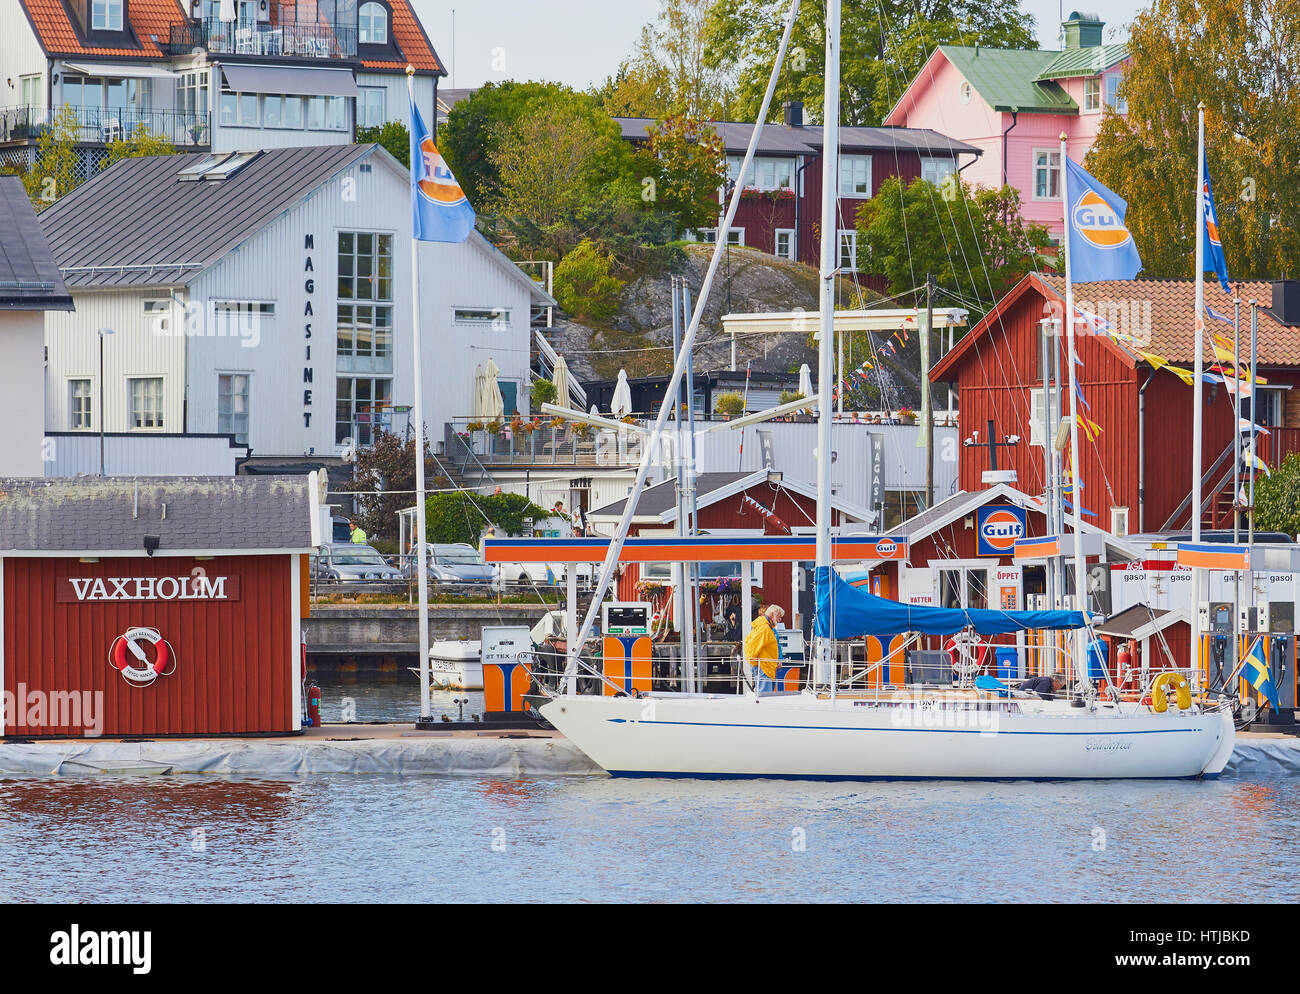 Yacht refuelling at petrol station, Vaxholm, Stockholm archipelago, Sweden, Scandinavia Stock Photo